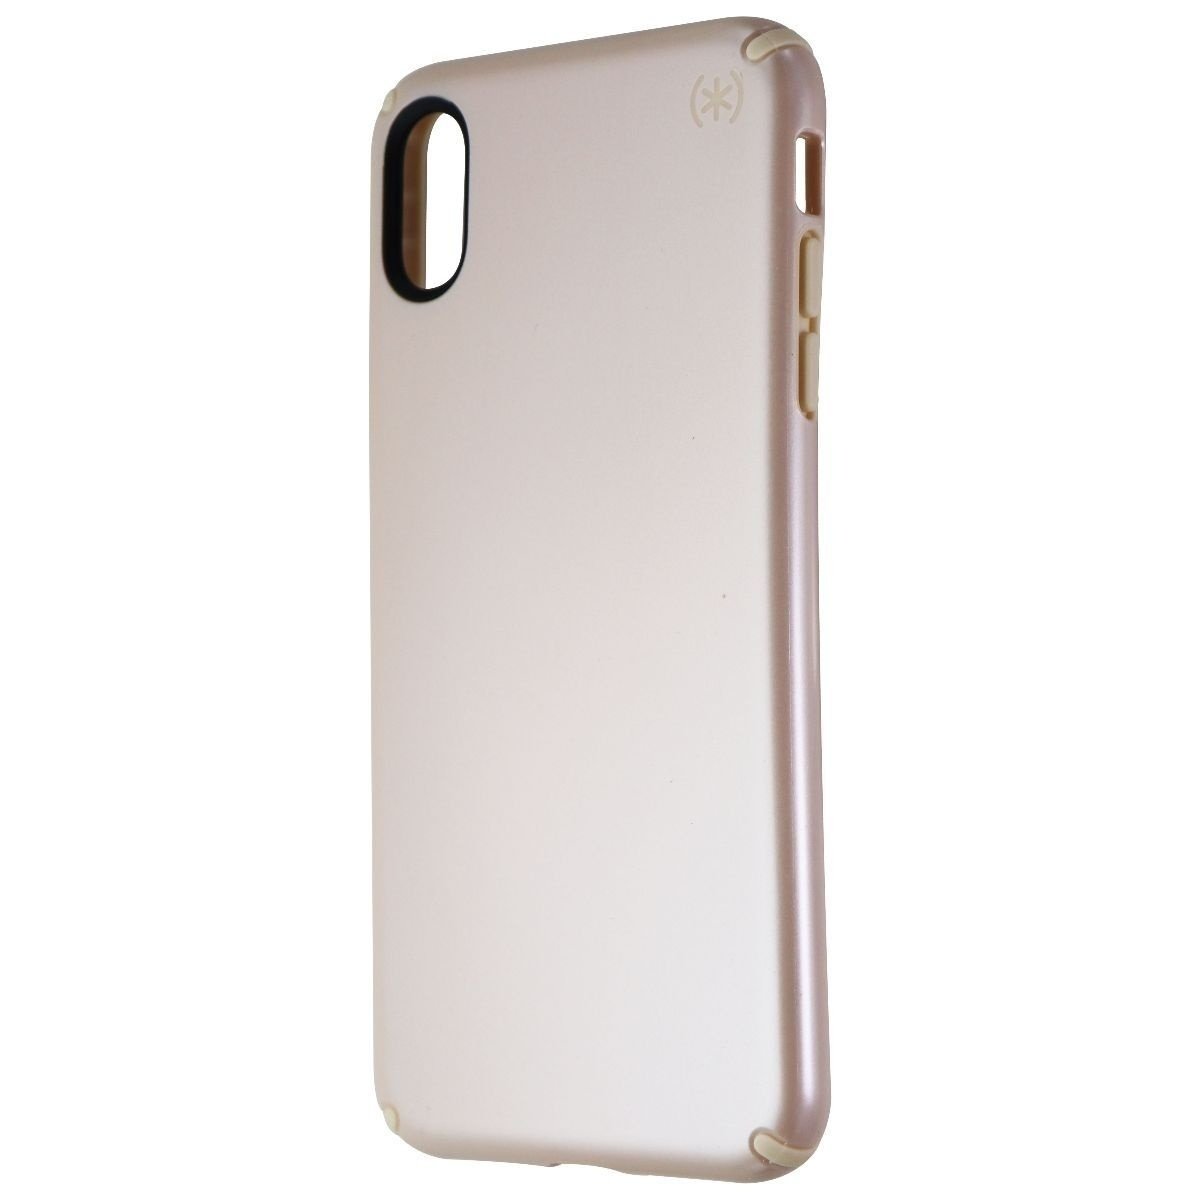 Speck Presidio Metallic Series Case For Apple IPhone XS Max - Gold Metallic